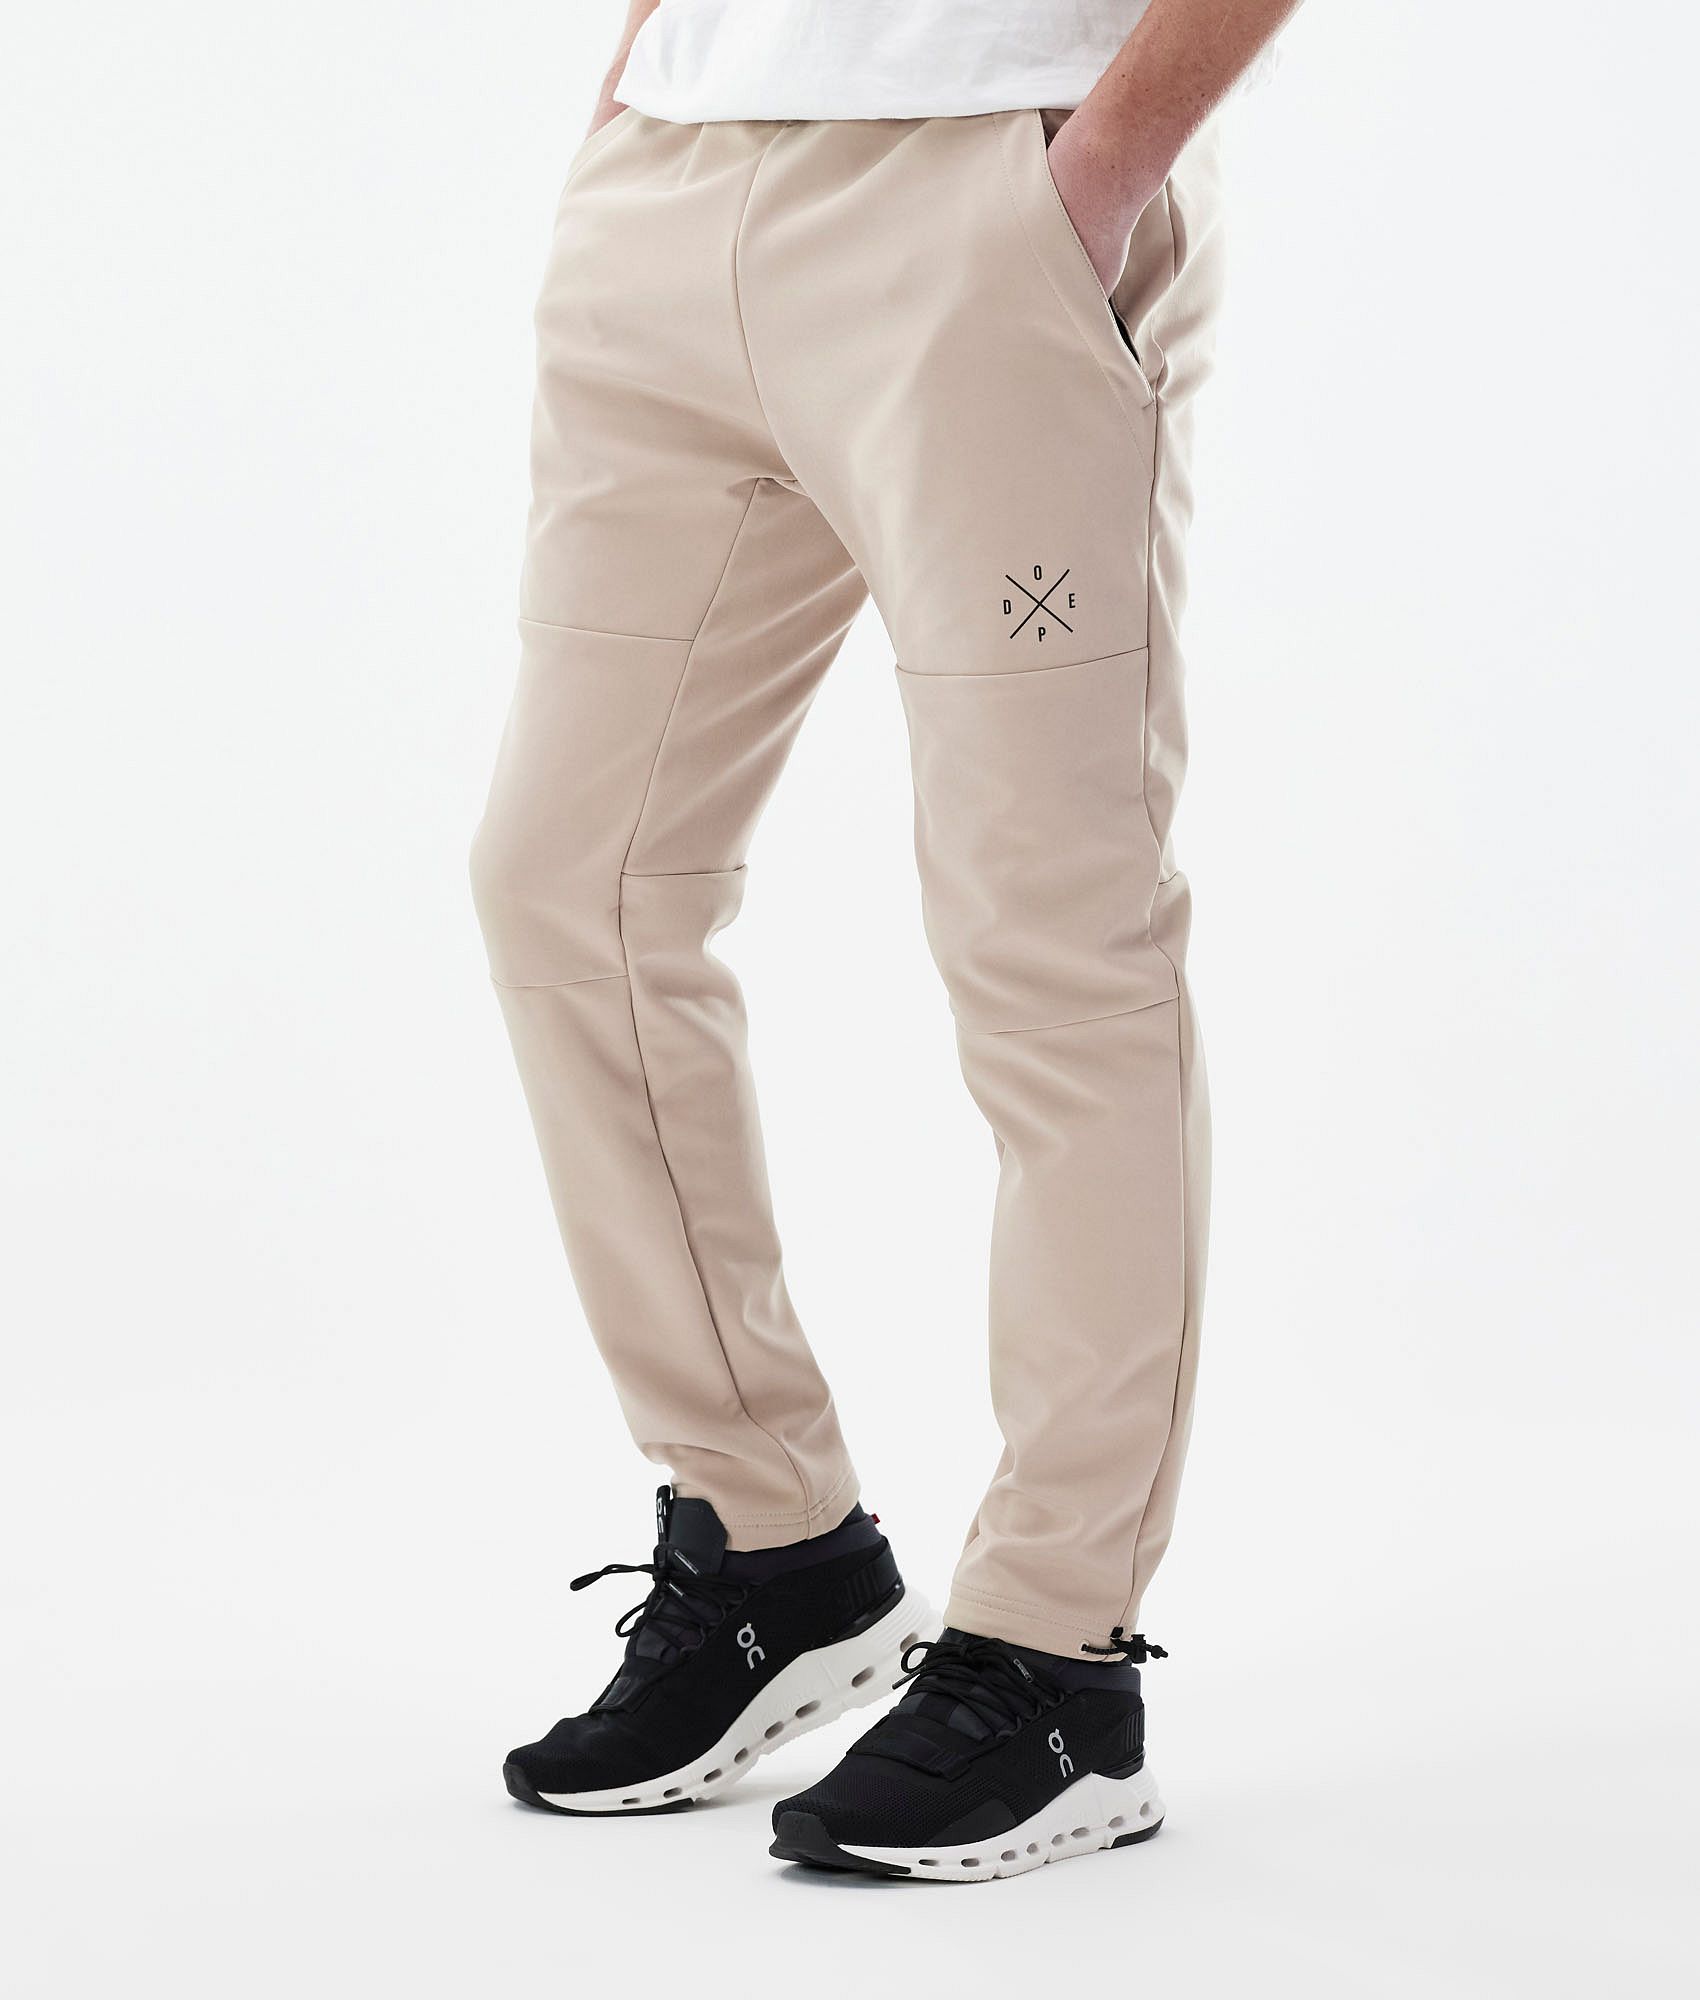 Columbia Silver Ridge II Cargo Pant - Men's outdoor pants | SportFits Shop